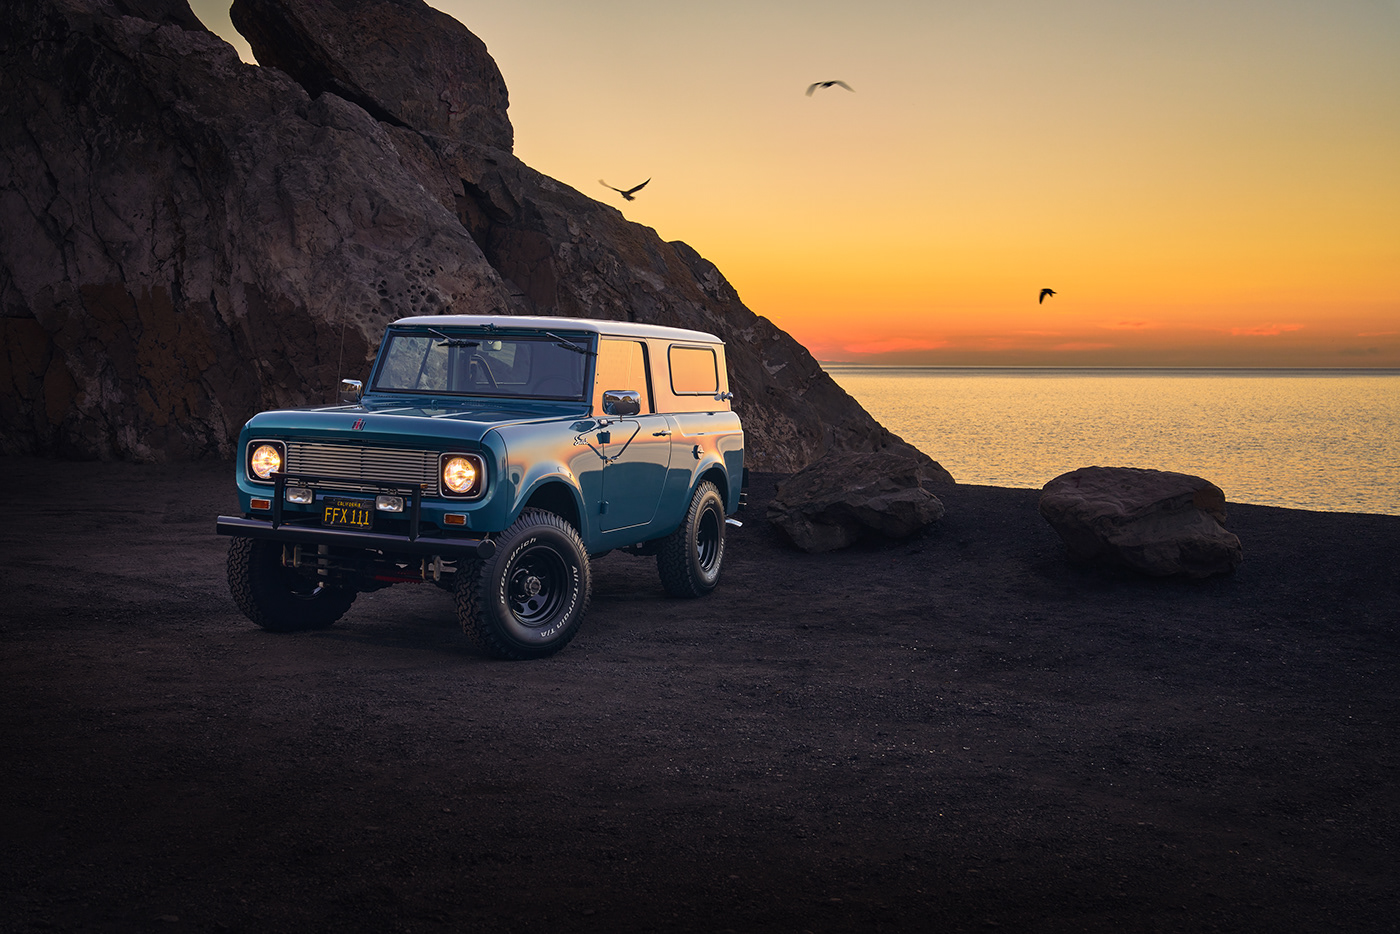 automotive   beach car Landscape lifestyle lighting scenic scout Surf trahanphoto